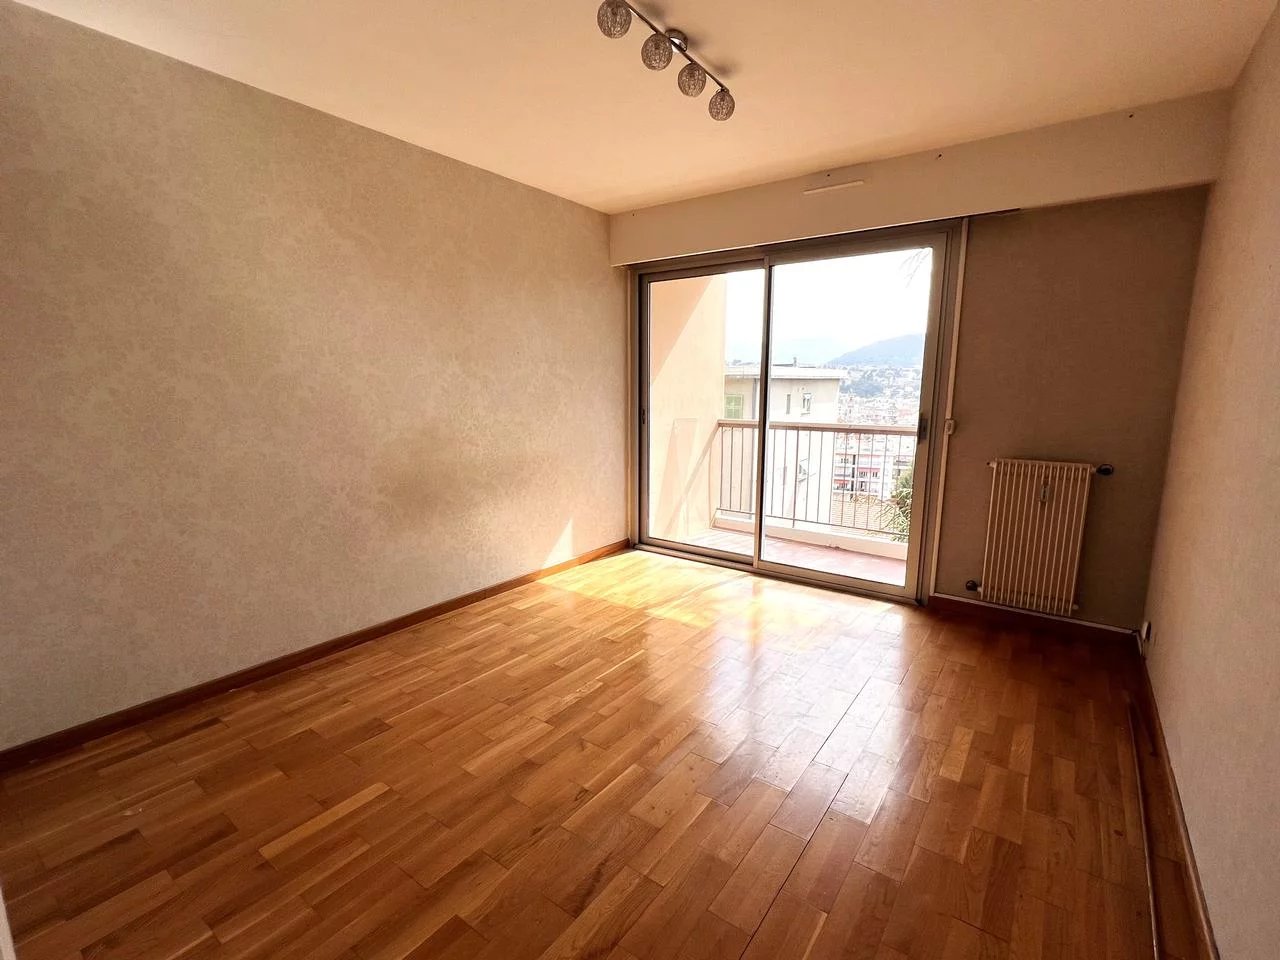 Appartement  2 Locali 50.33m2  In vendita   199 000 €